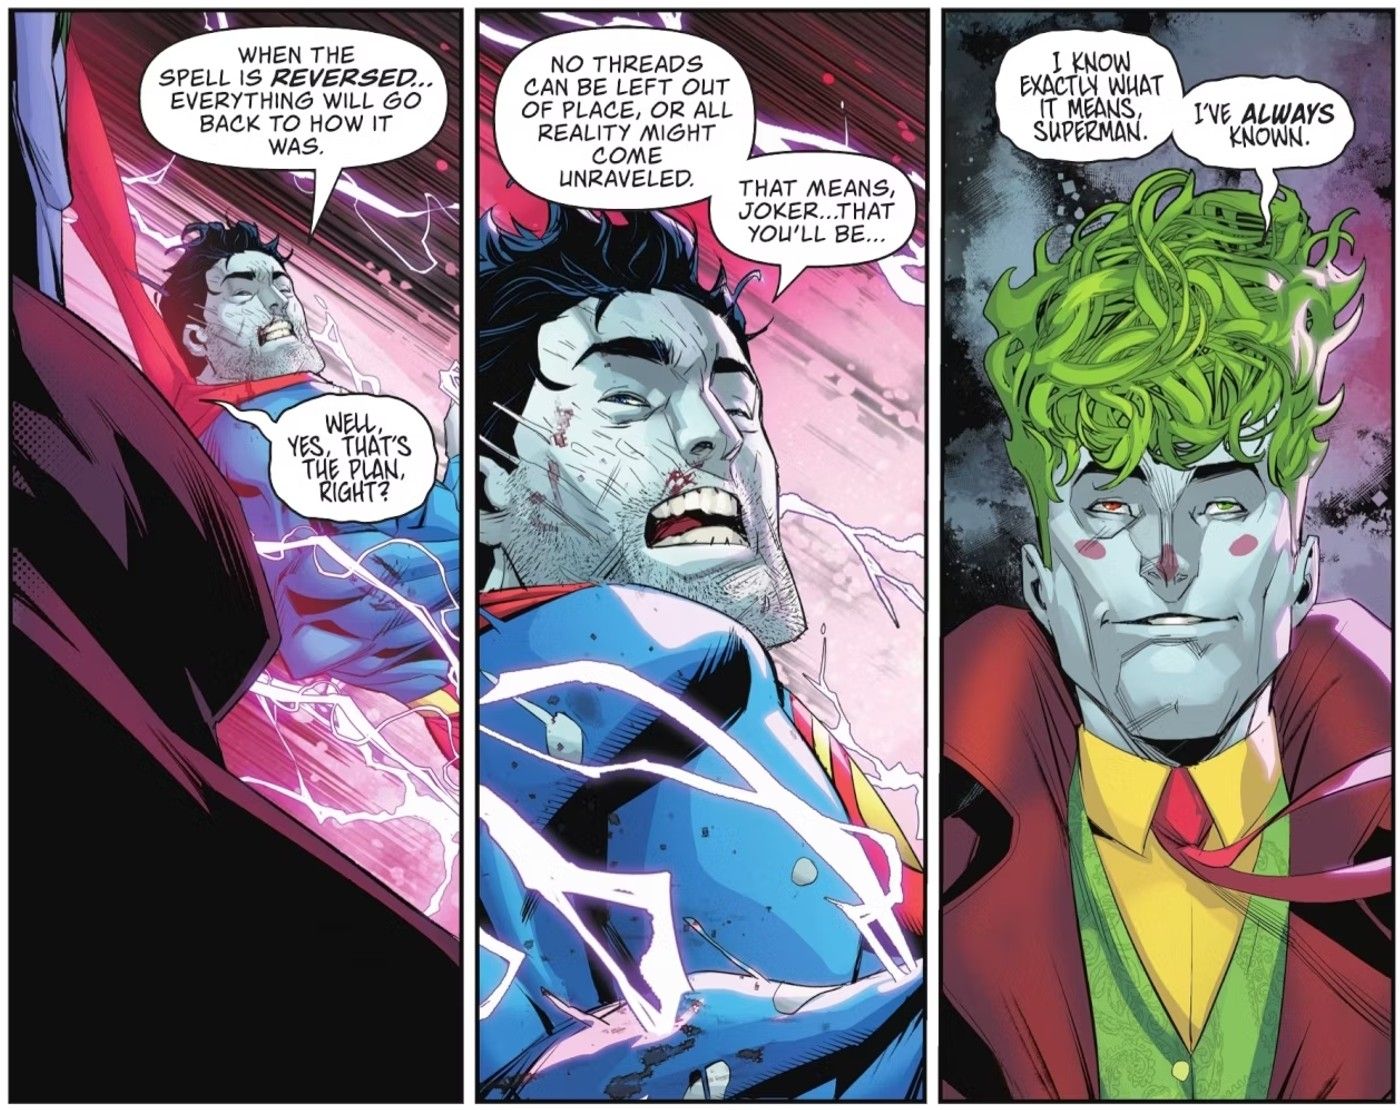 Comic book panels: a Bizarro-infected Superman talks with Bizarro Joker.